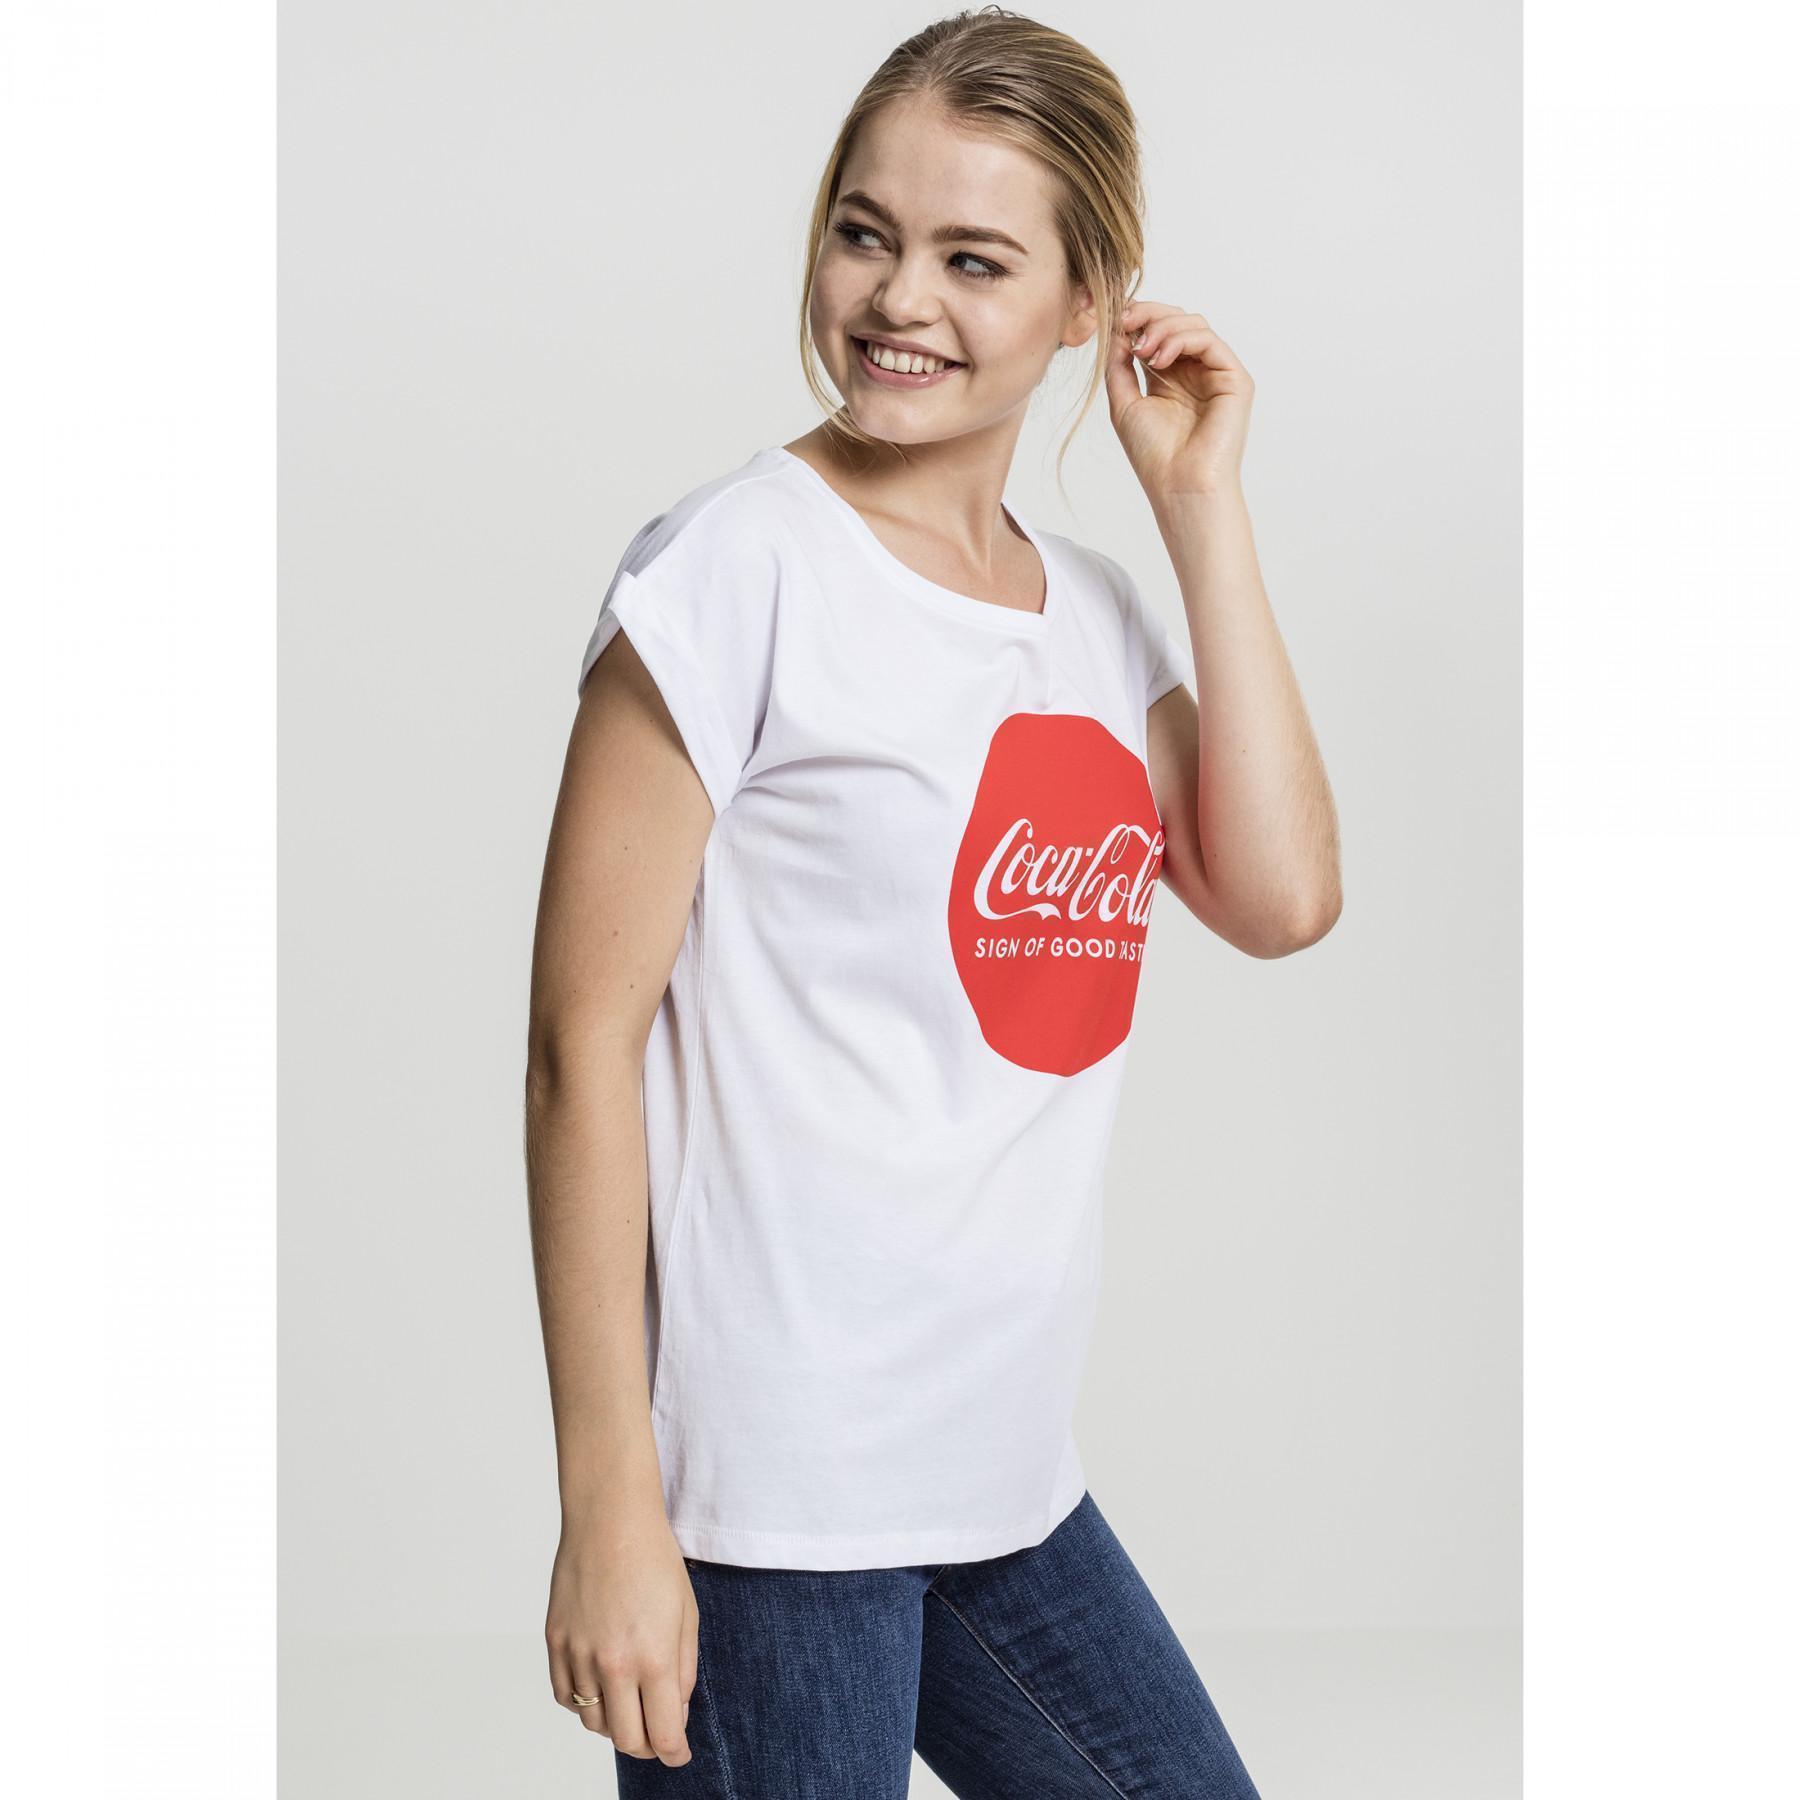 Damska Koszulka Urban Classic coca cola okrągłe logo